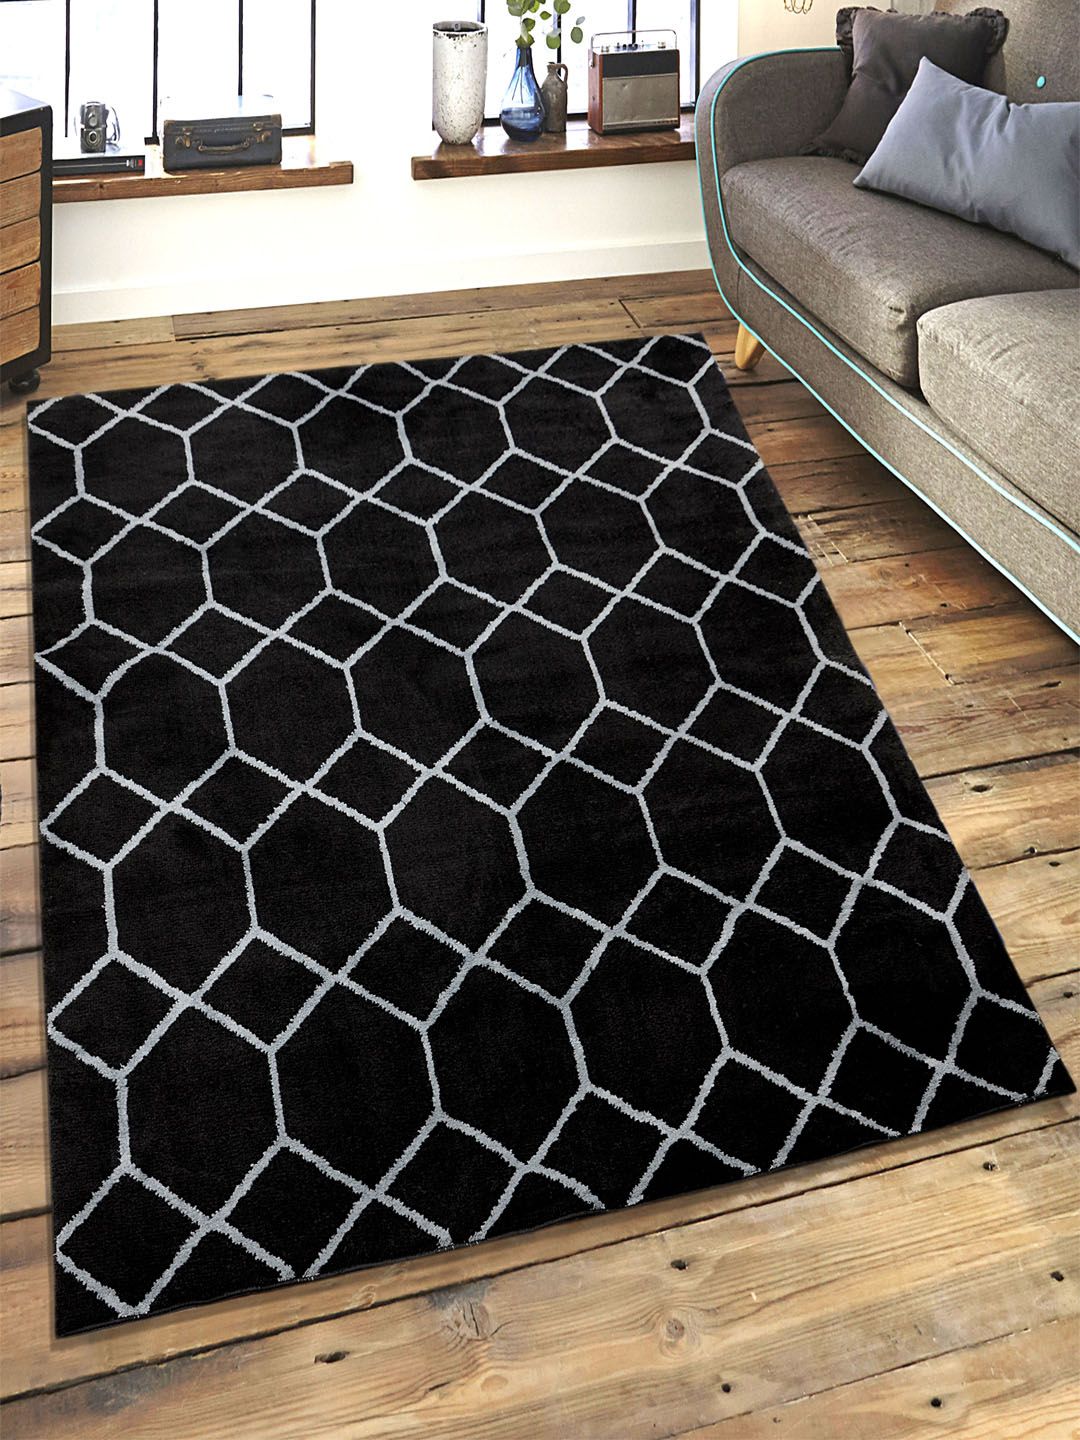 Saral Home Black & White Geometric Microfiber Anti-Skid Carpet Price in India